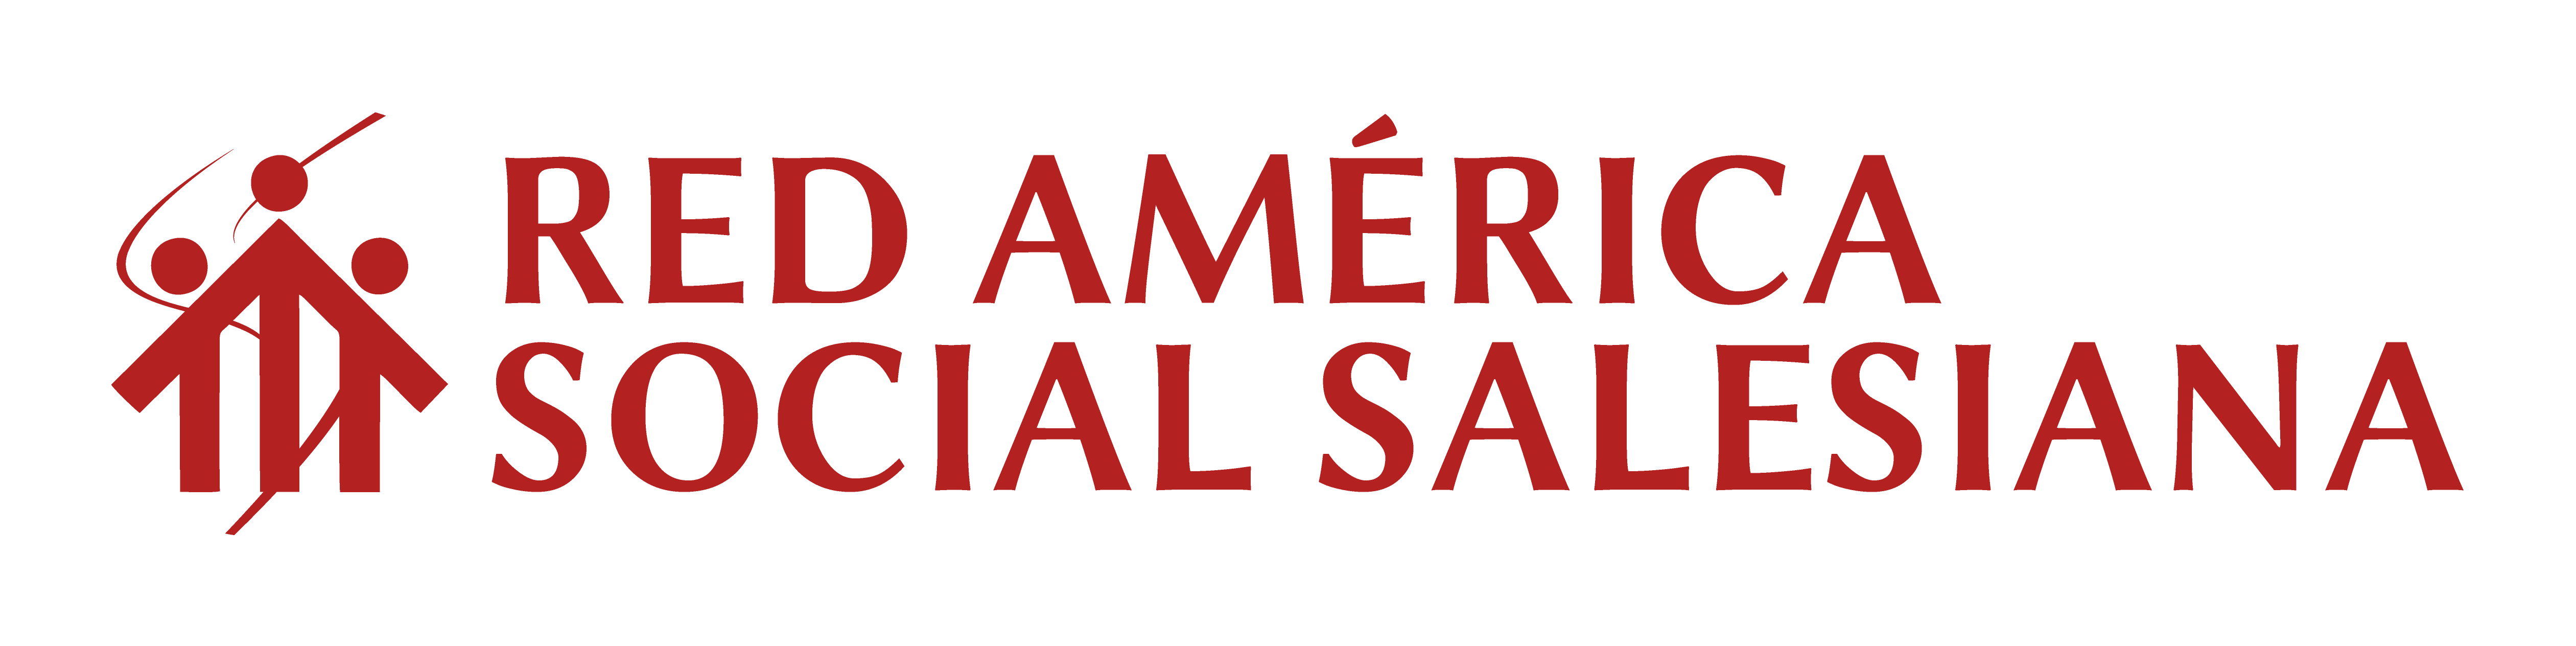 Red América Social Salesiana